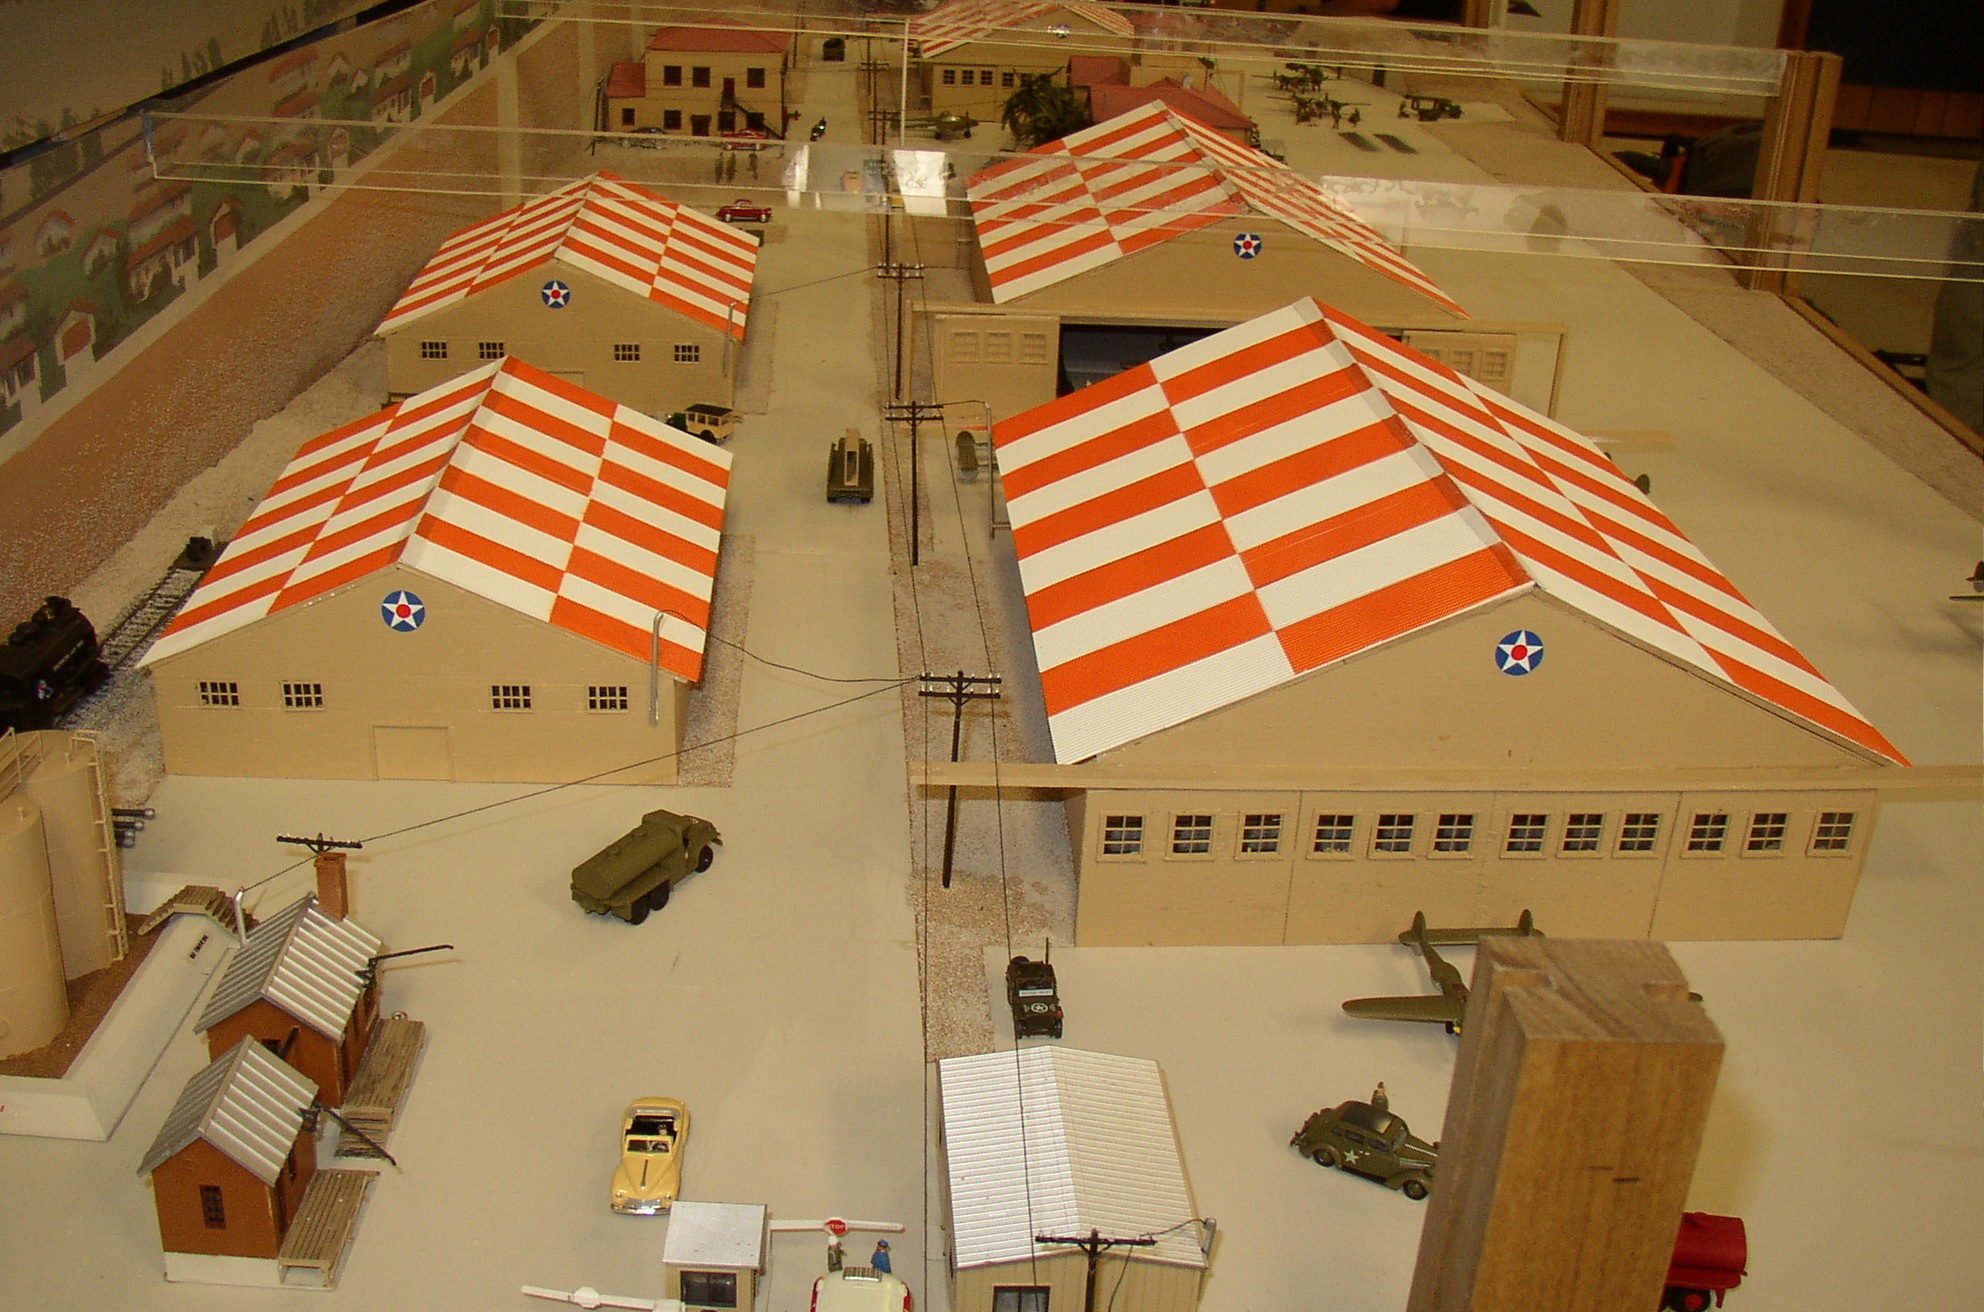 Diorama Lineup of hangars